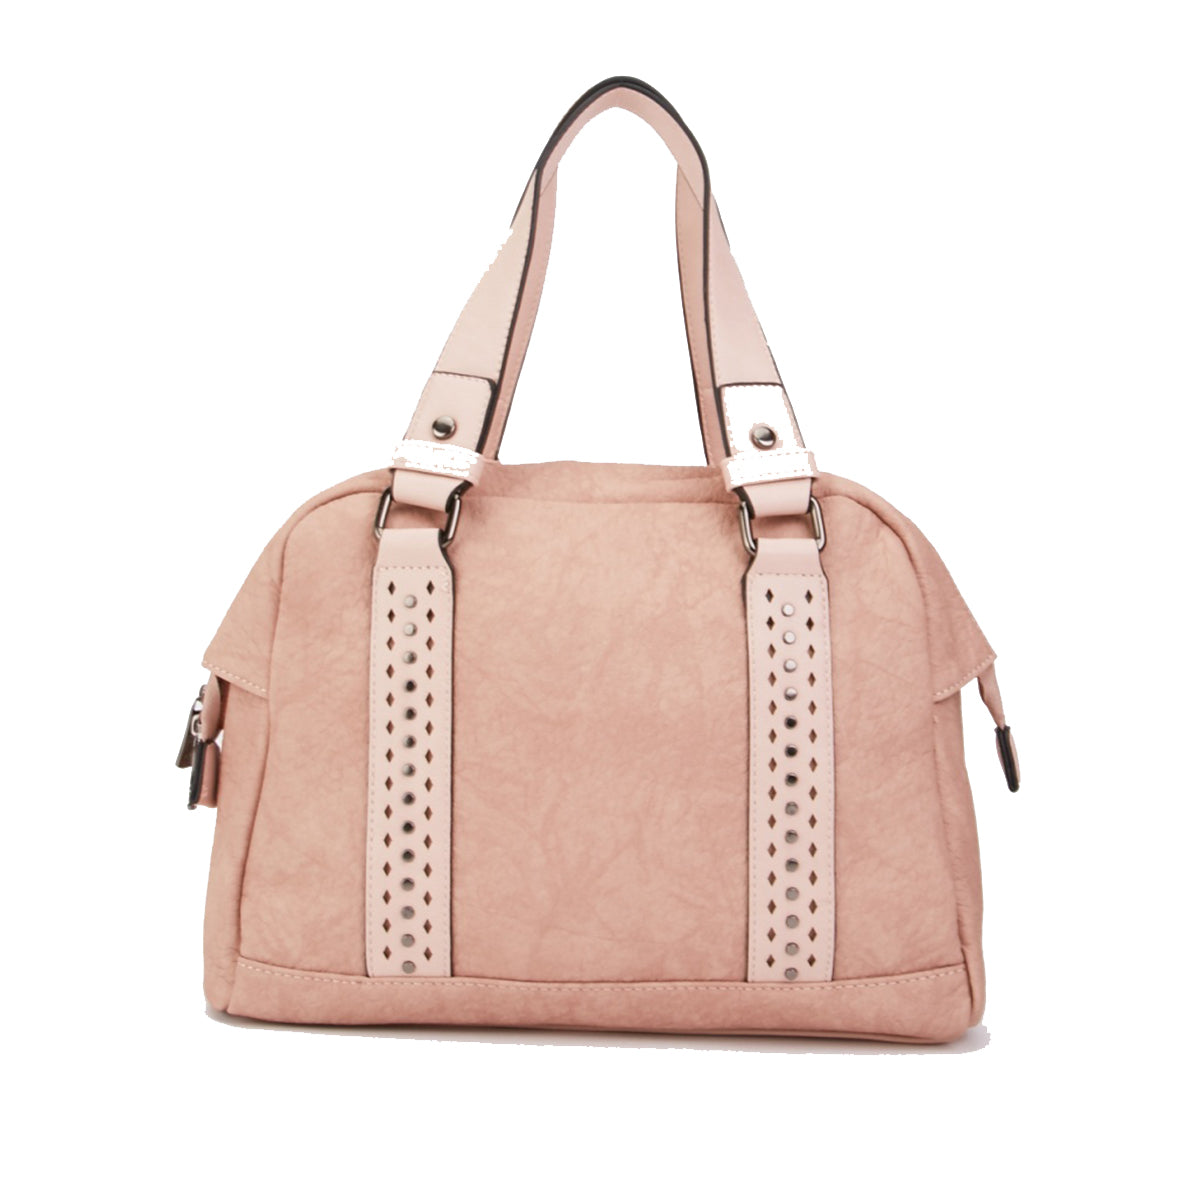 Textured Feel Studded handbag